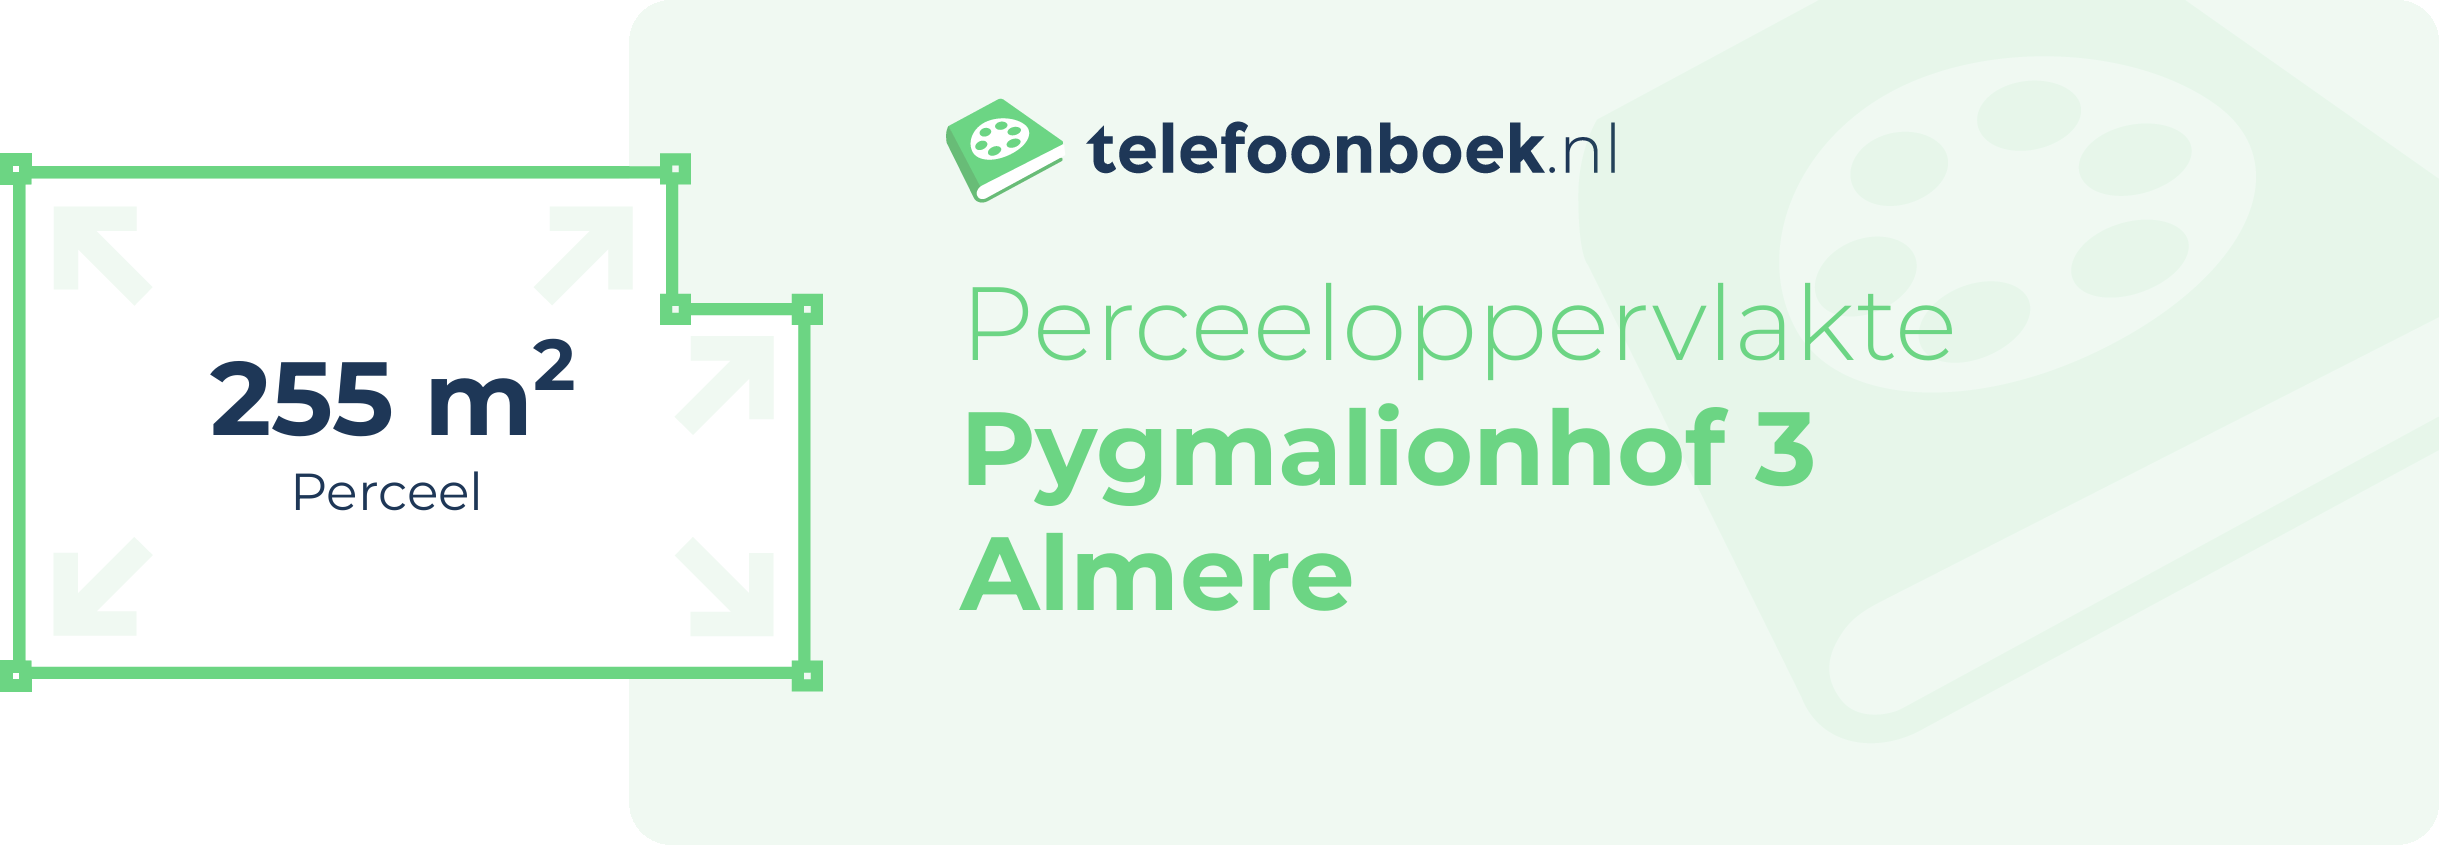 Perceeloppervlakte Pygmalionhof 3 Almere